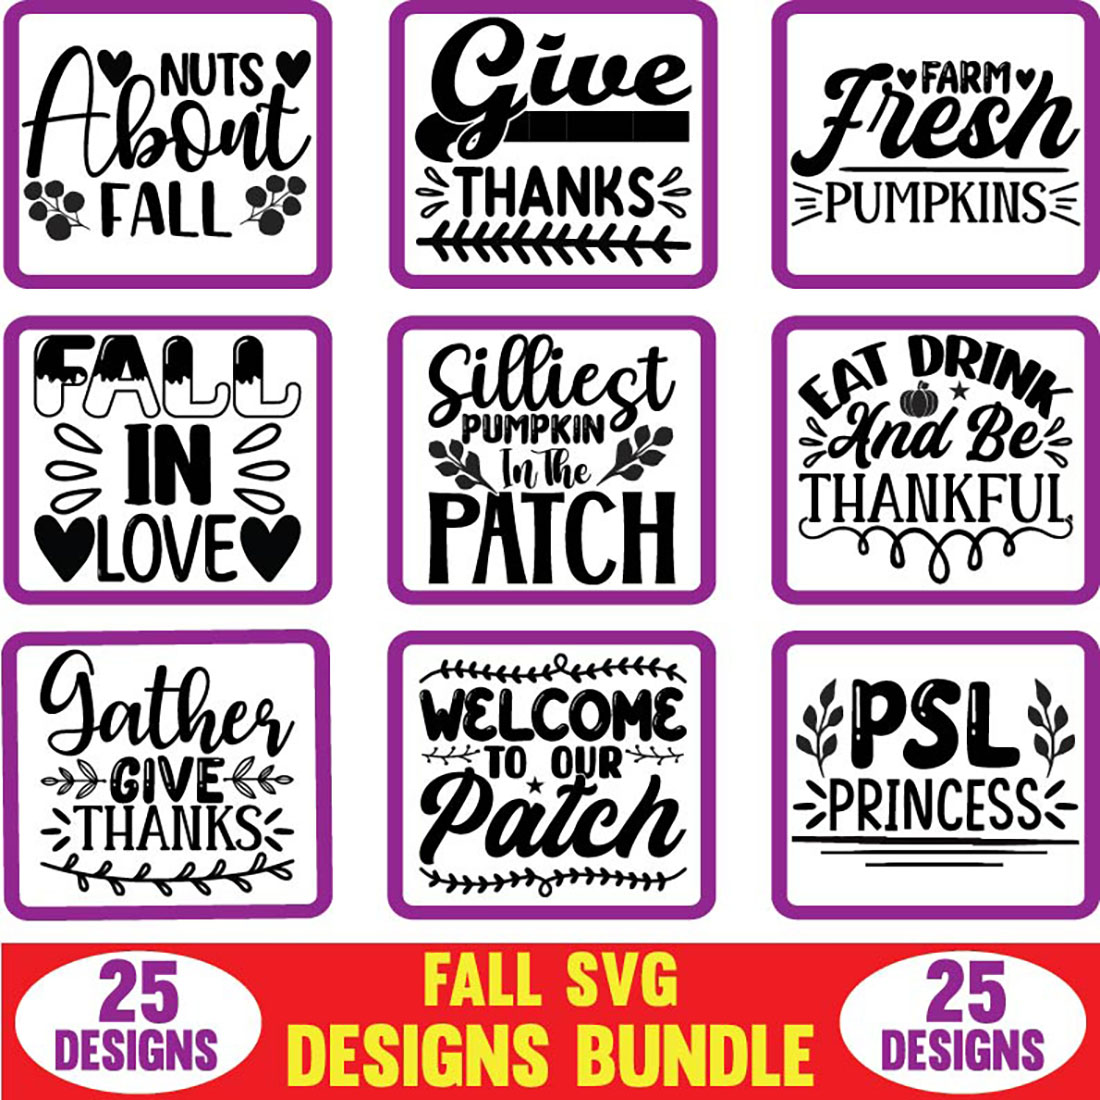 Fall SVG Designs Bundle main cover